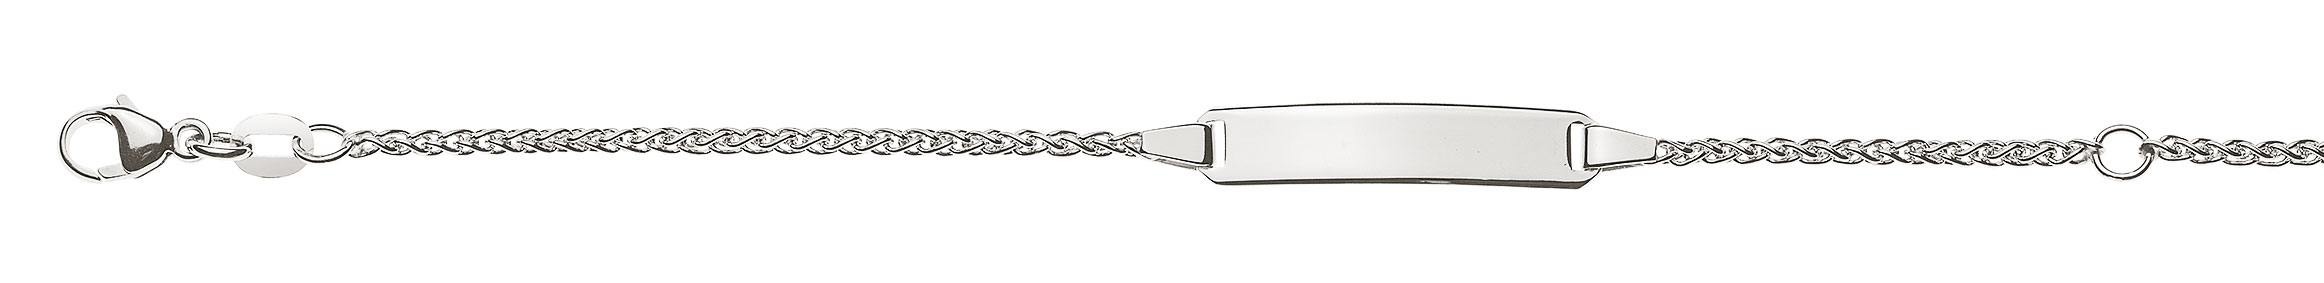 AURONOS Prestige ID-Bracelet en or blanc 18k Chaîne de tresses 18cm